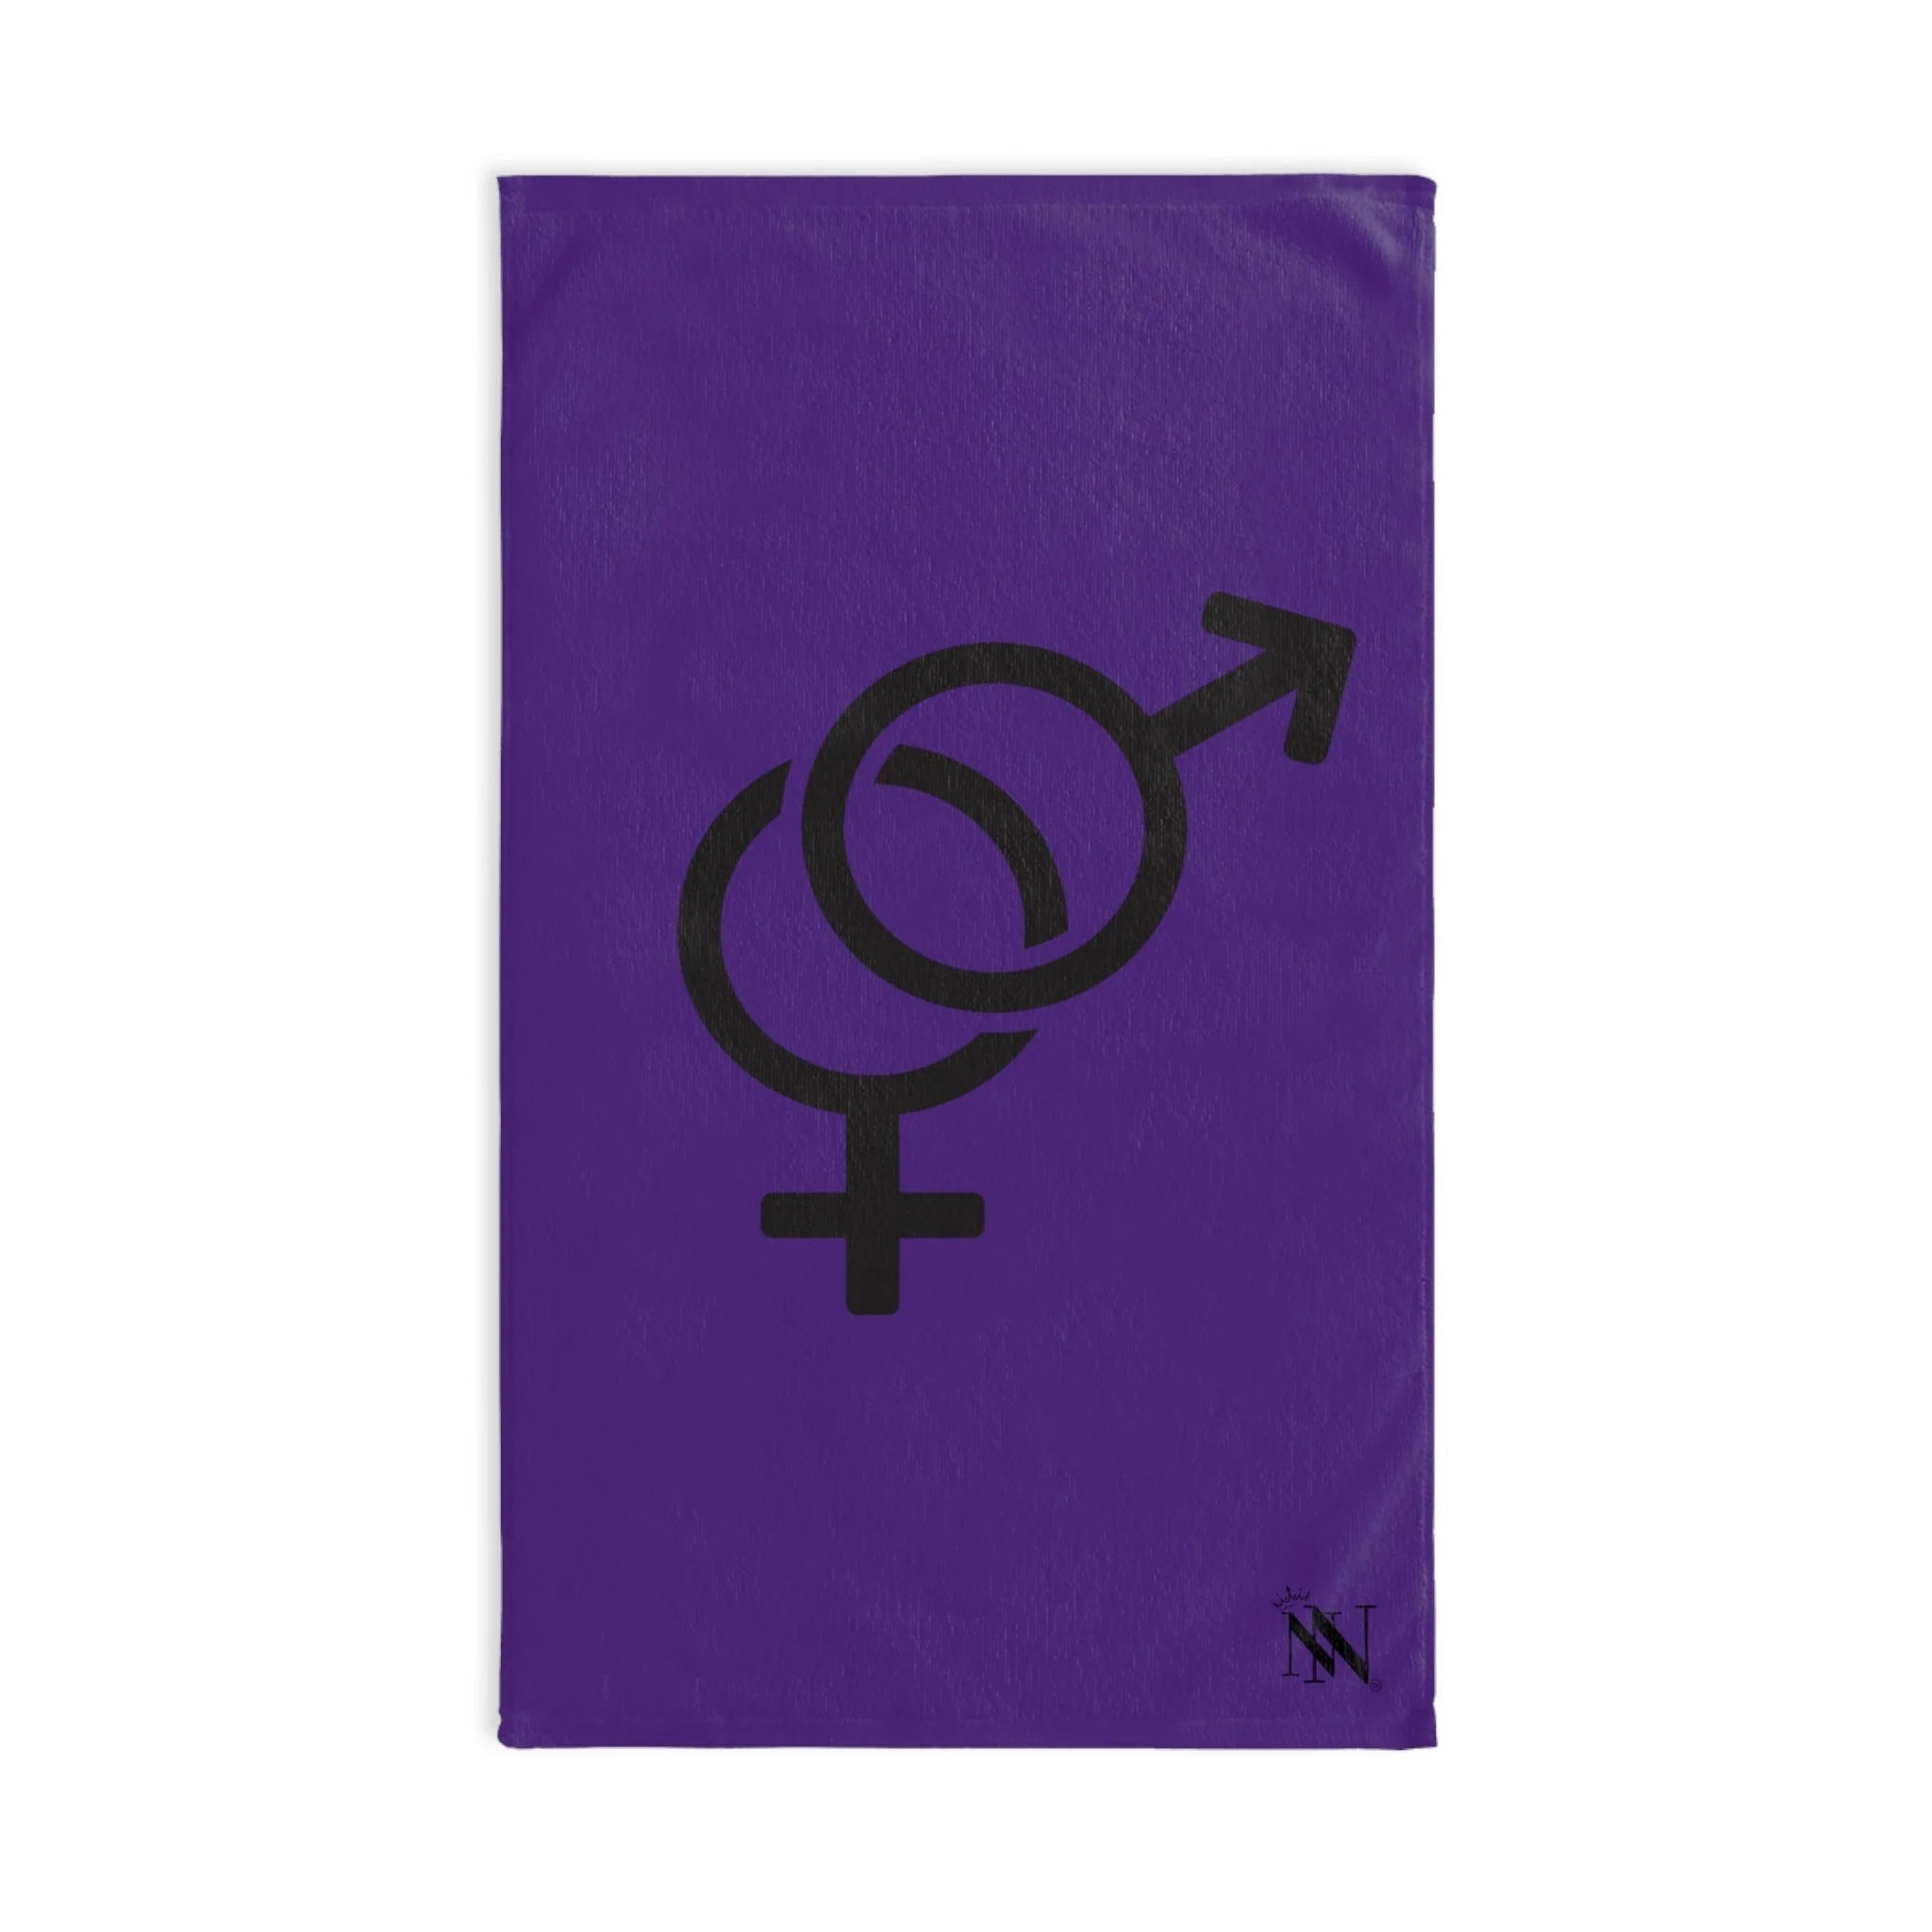 Gender Signs | Nectar Napkins Fun-Flirty After Sex Towels NECTAR NAPKINS